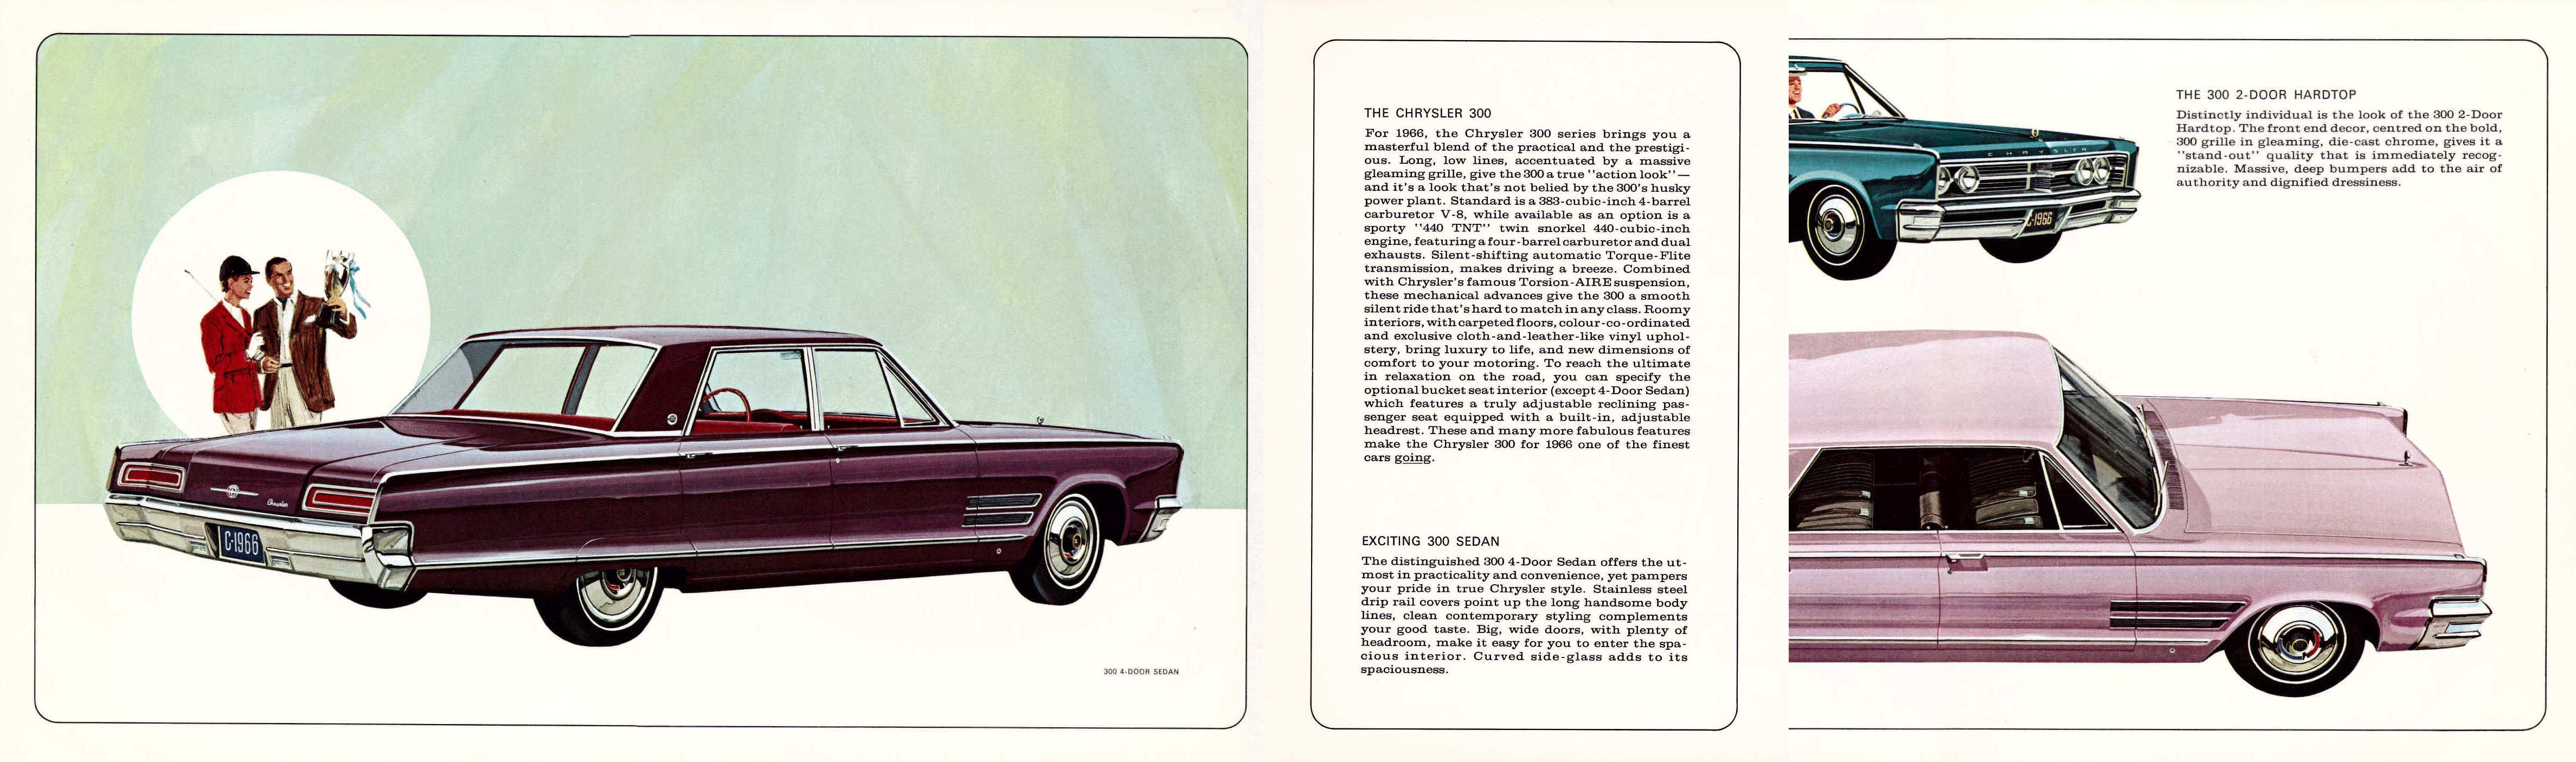 1966_Chrysler_Cdn-08-09a